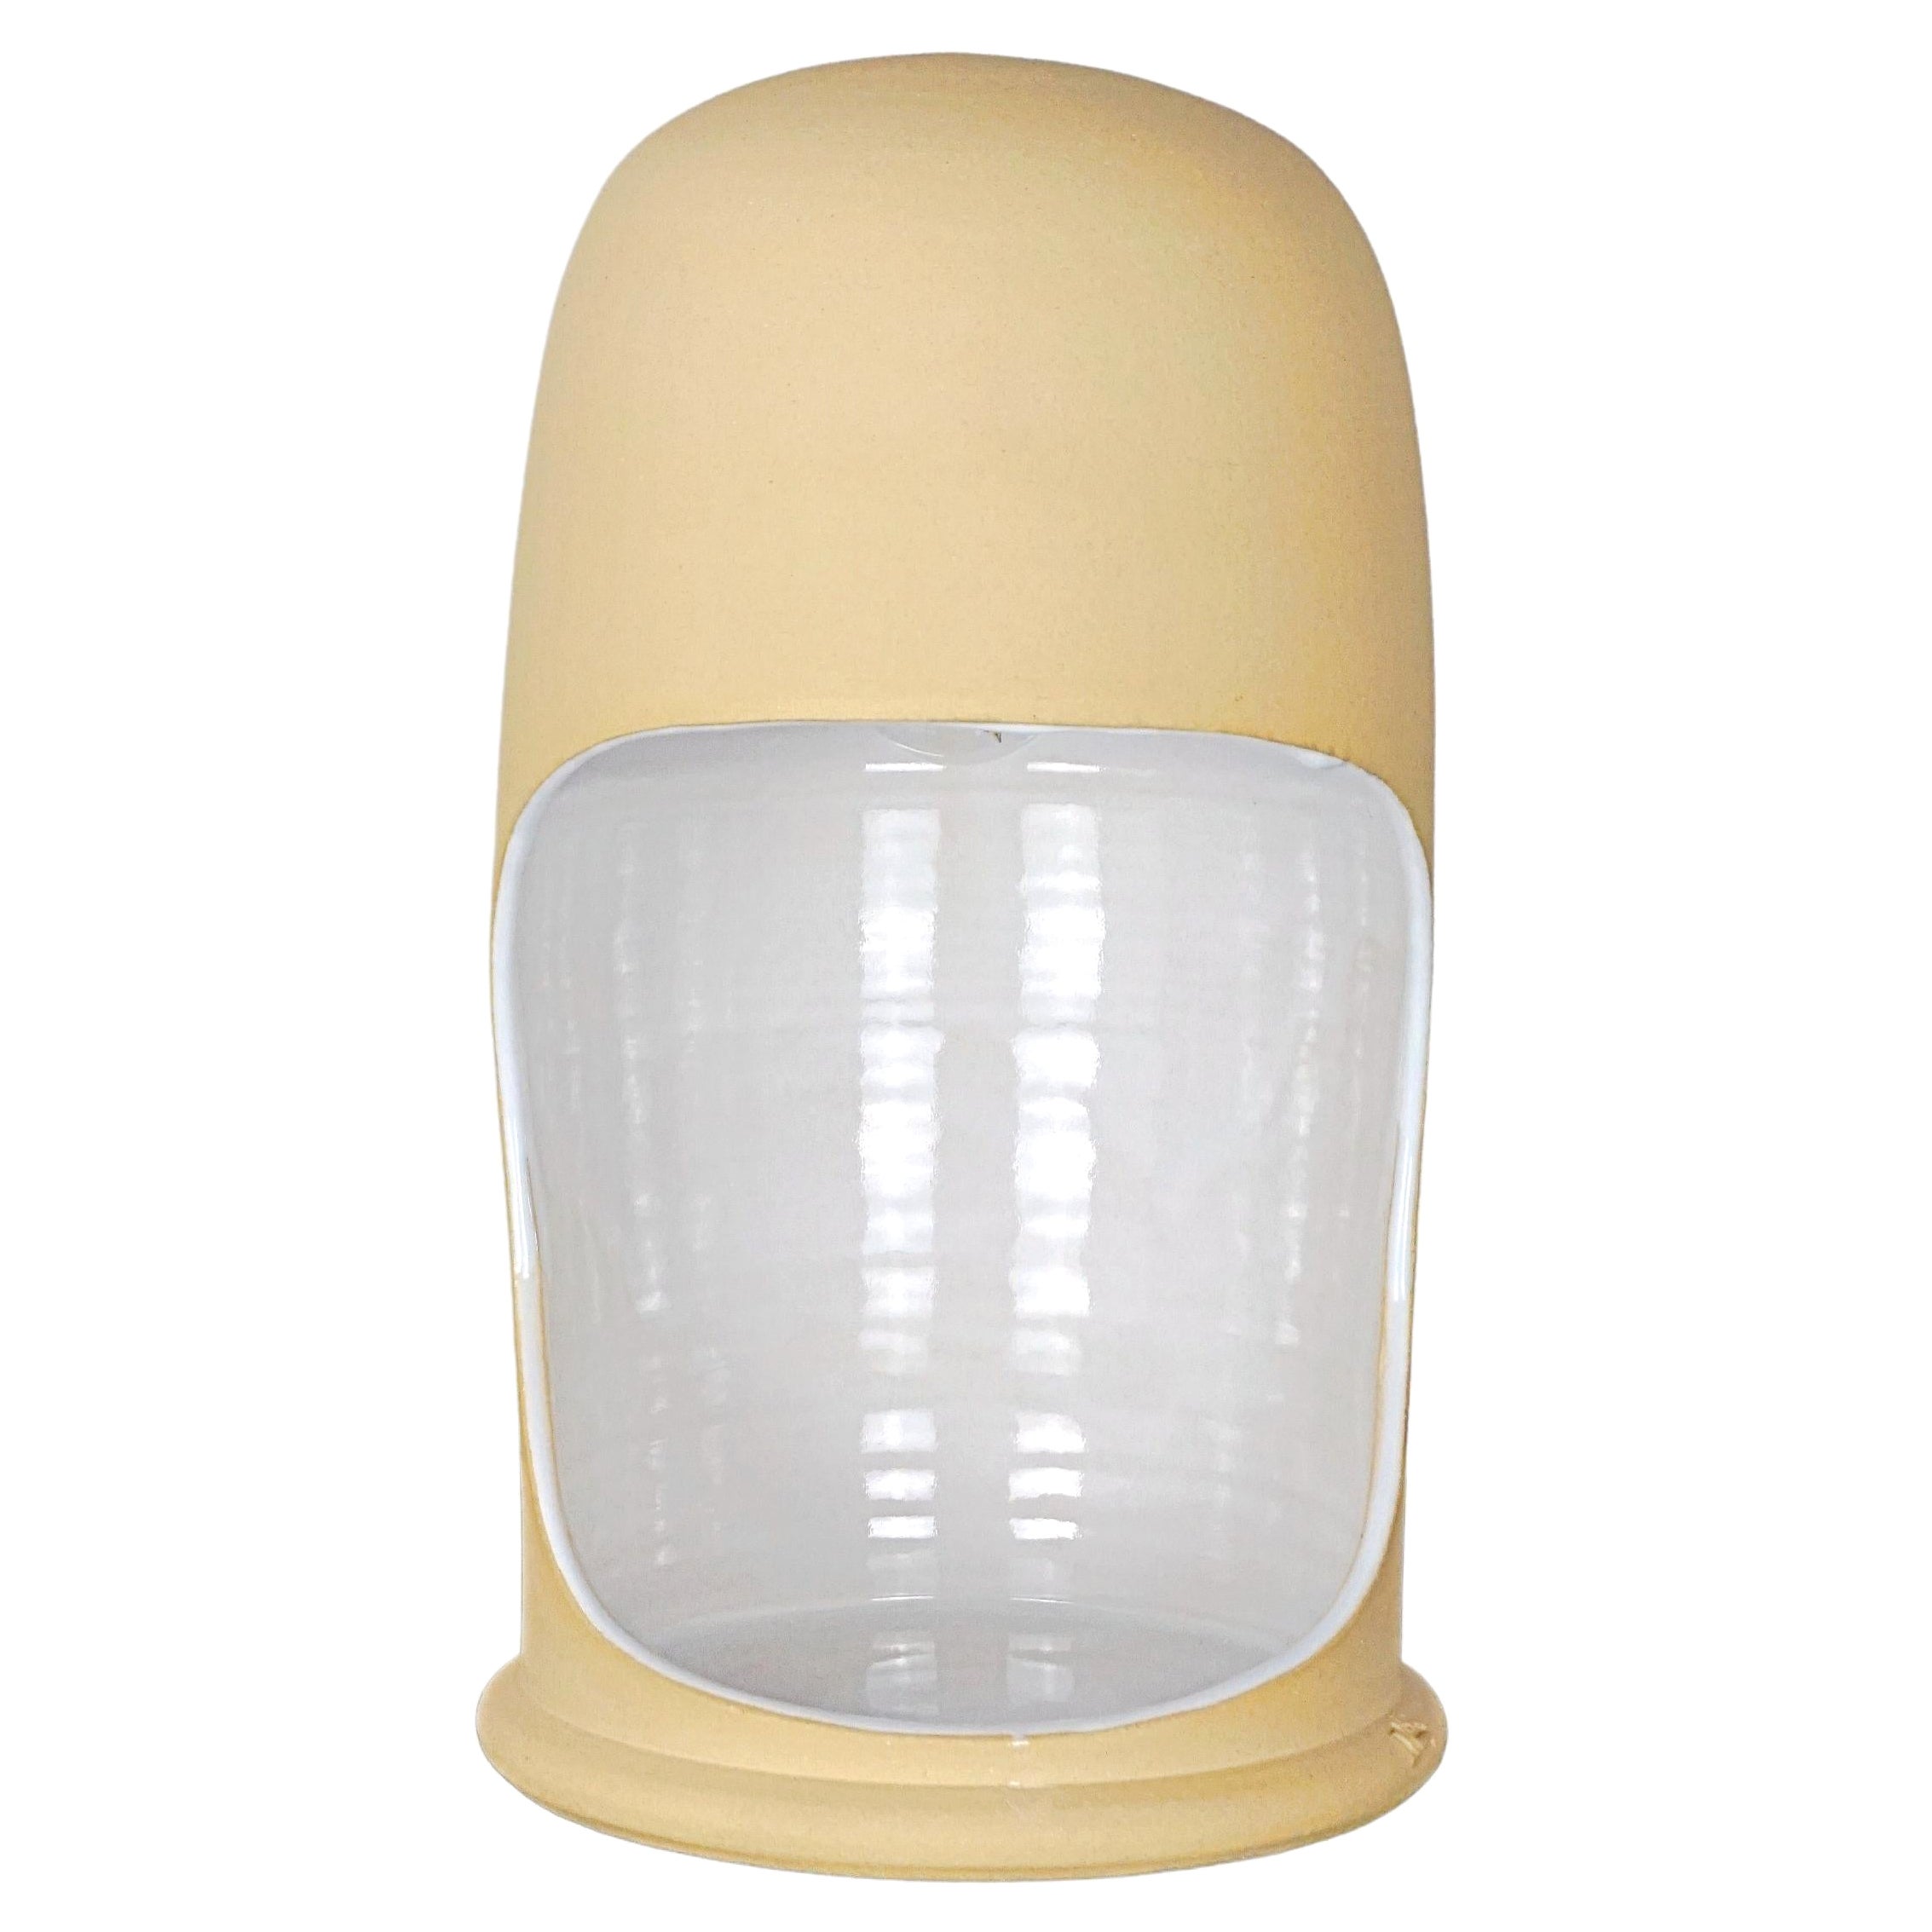 Contemporary Manolo Eirin Handmade Table Side Lamp with Storage, Ceramic Beige (lampe d'appoint faite à la main avec rangement)